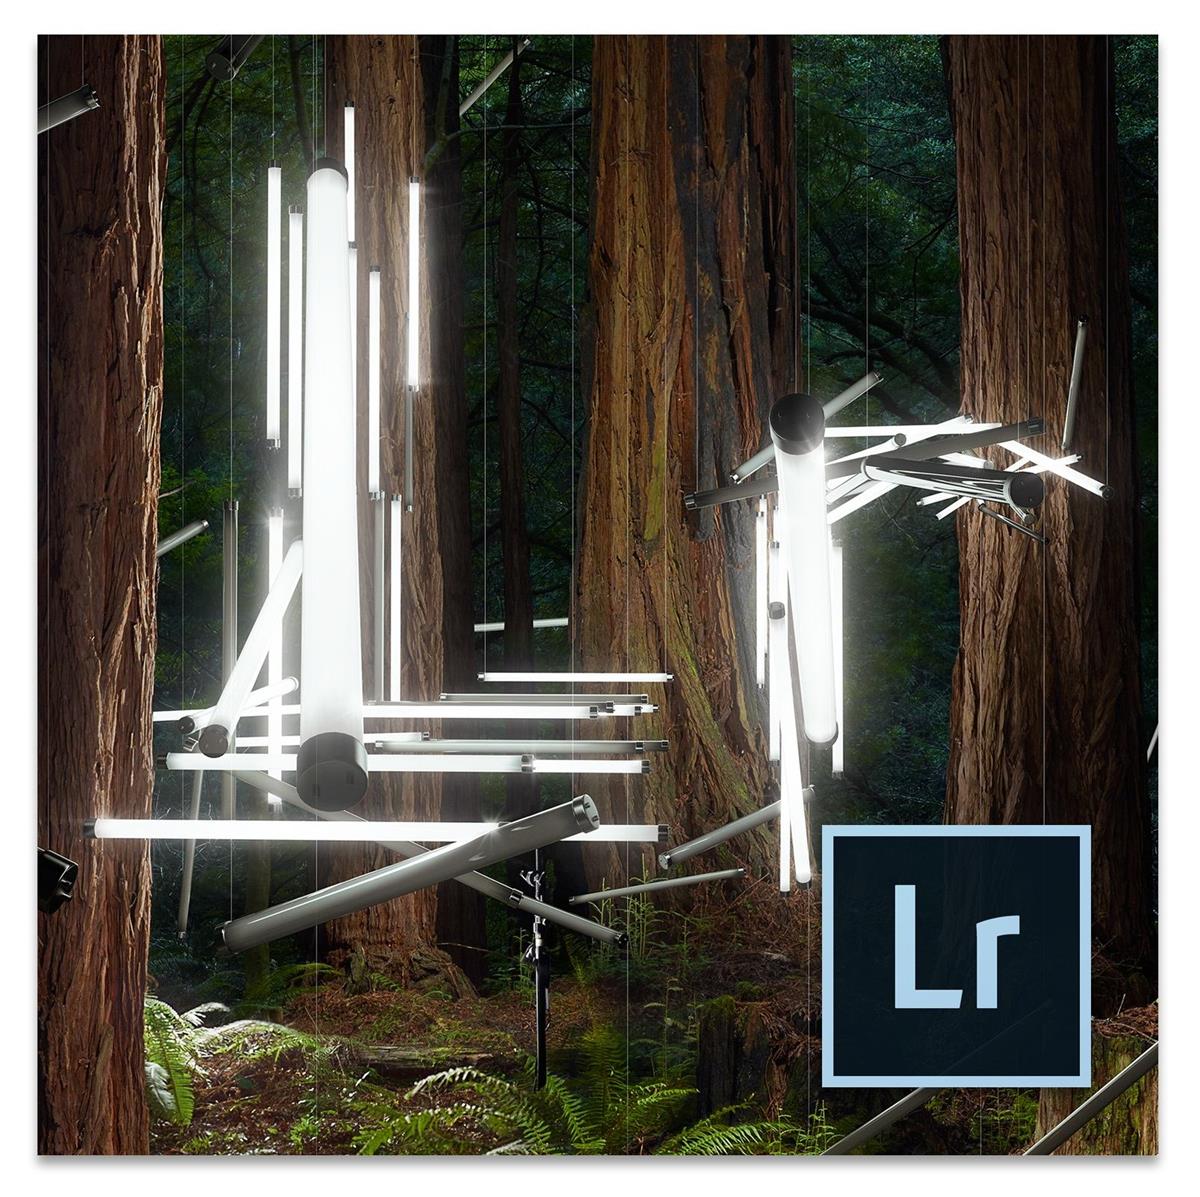 adobe photoshop lightroom 6 for mac free download